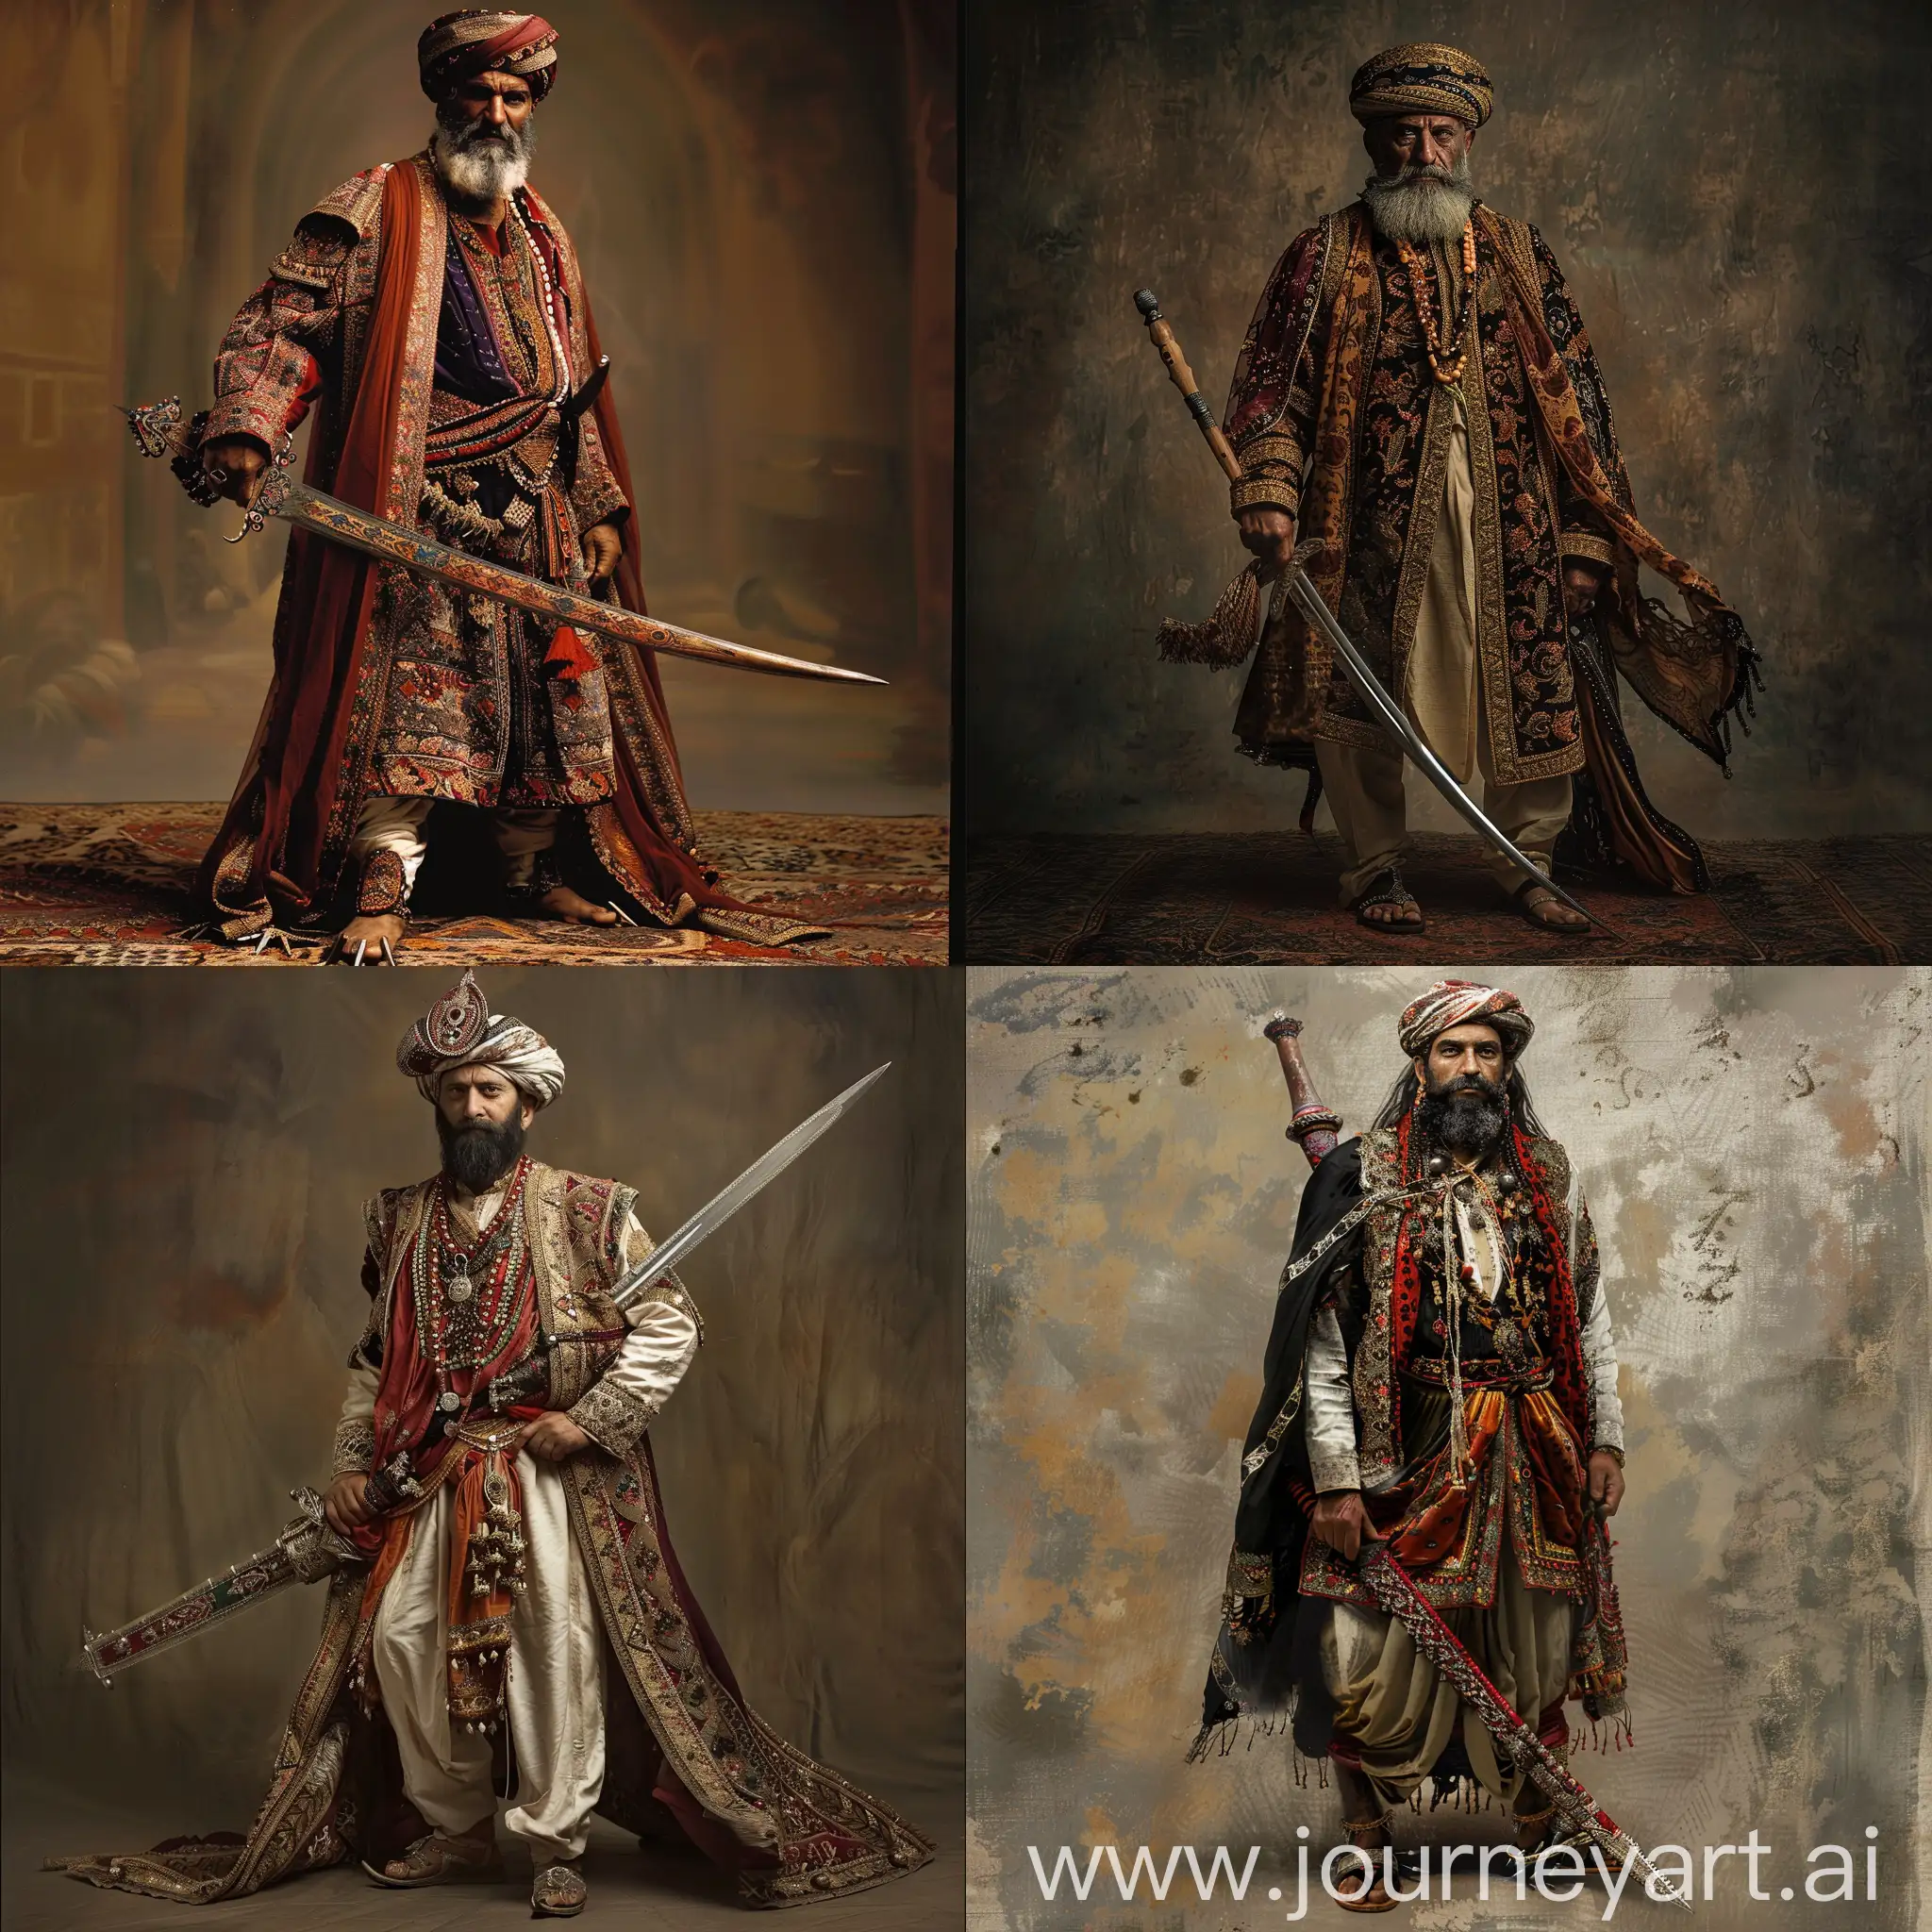 Sultan-Yaqub-Lais-Saffari-Baloch-Wearing-Traditional-Baloch-Attire-and-Sword